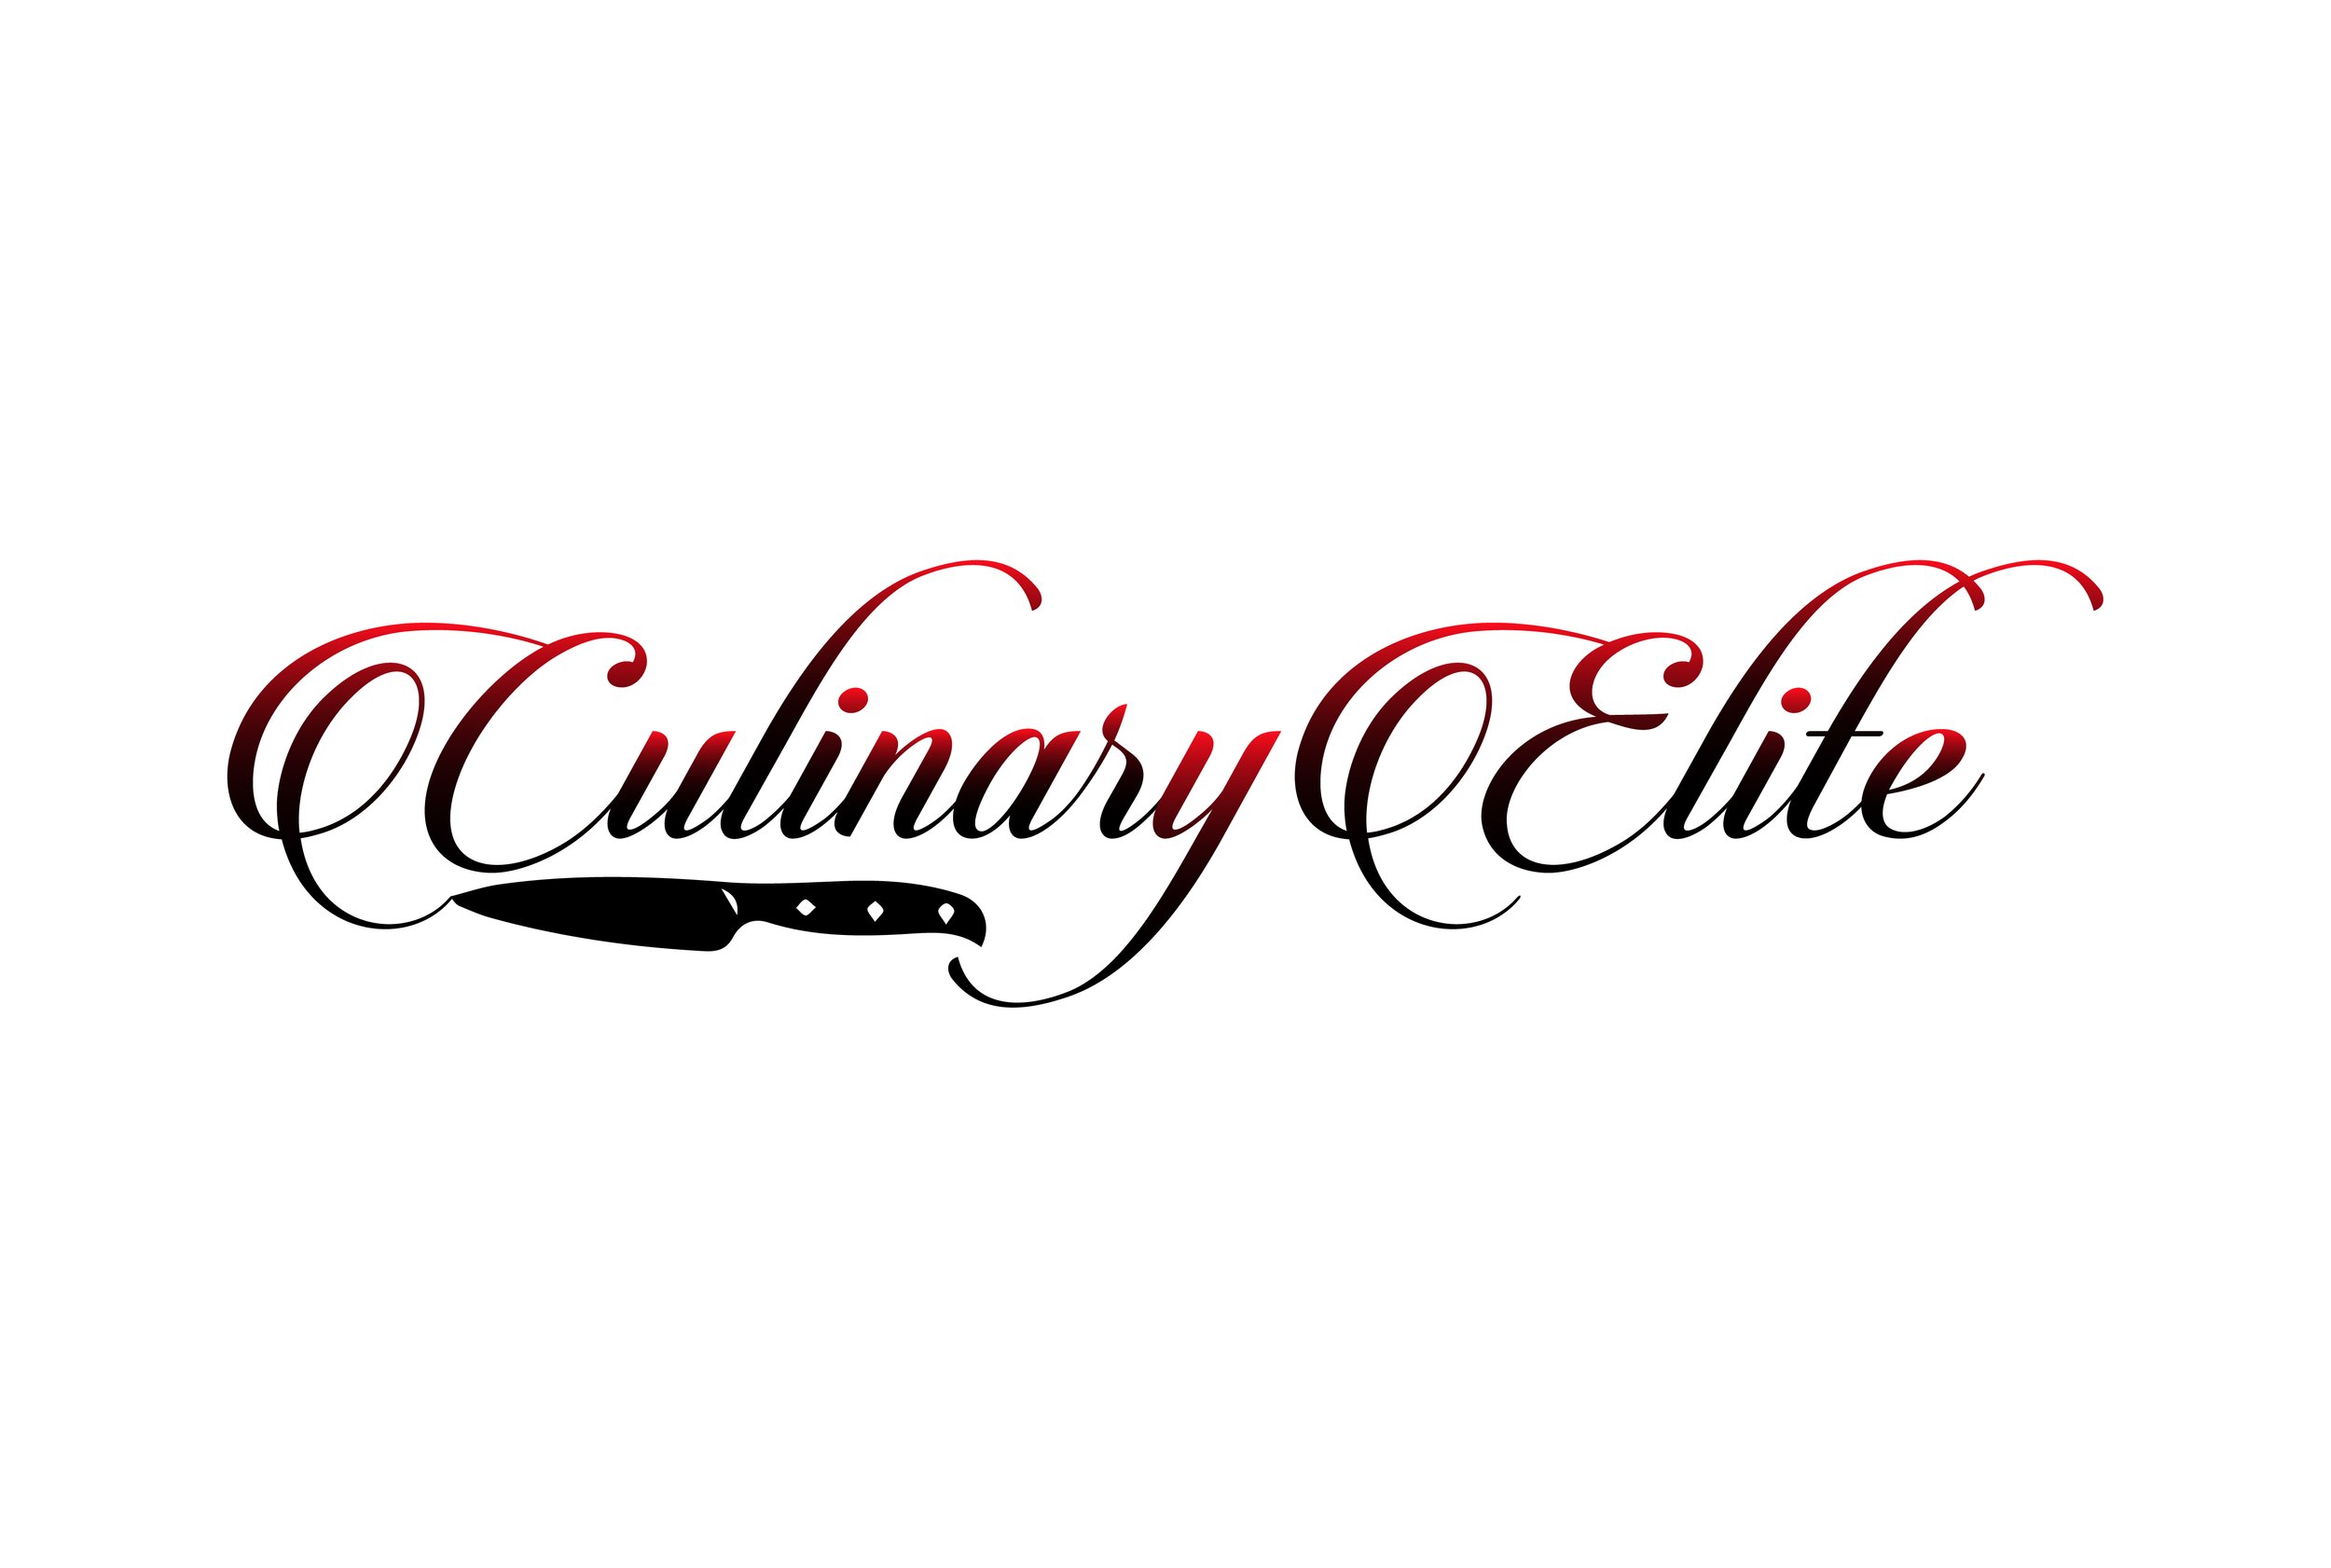 https://images.squarespace-cdn.com/content/v1/5ca241e54d546e096b801338/cda456a3-46aa-44dc-acd6-f0f49b5d2a1e/Culinary+Elite+jpg+file+%281%29.jpg